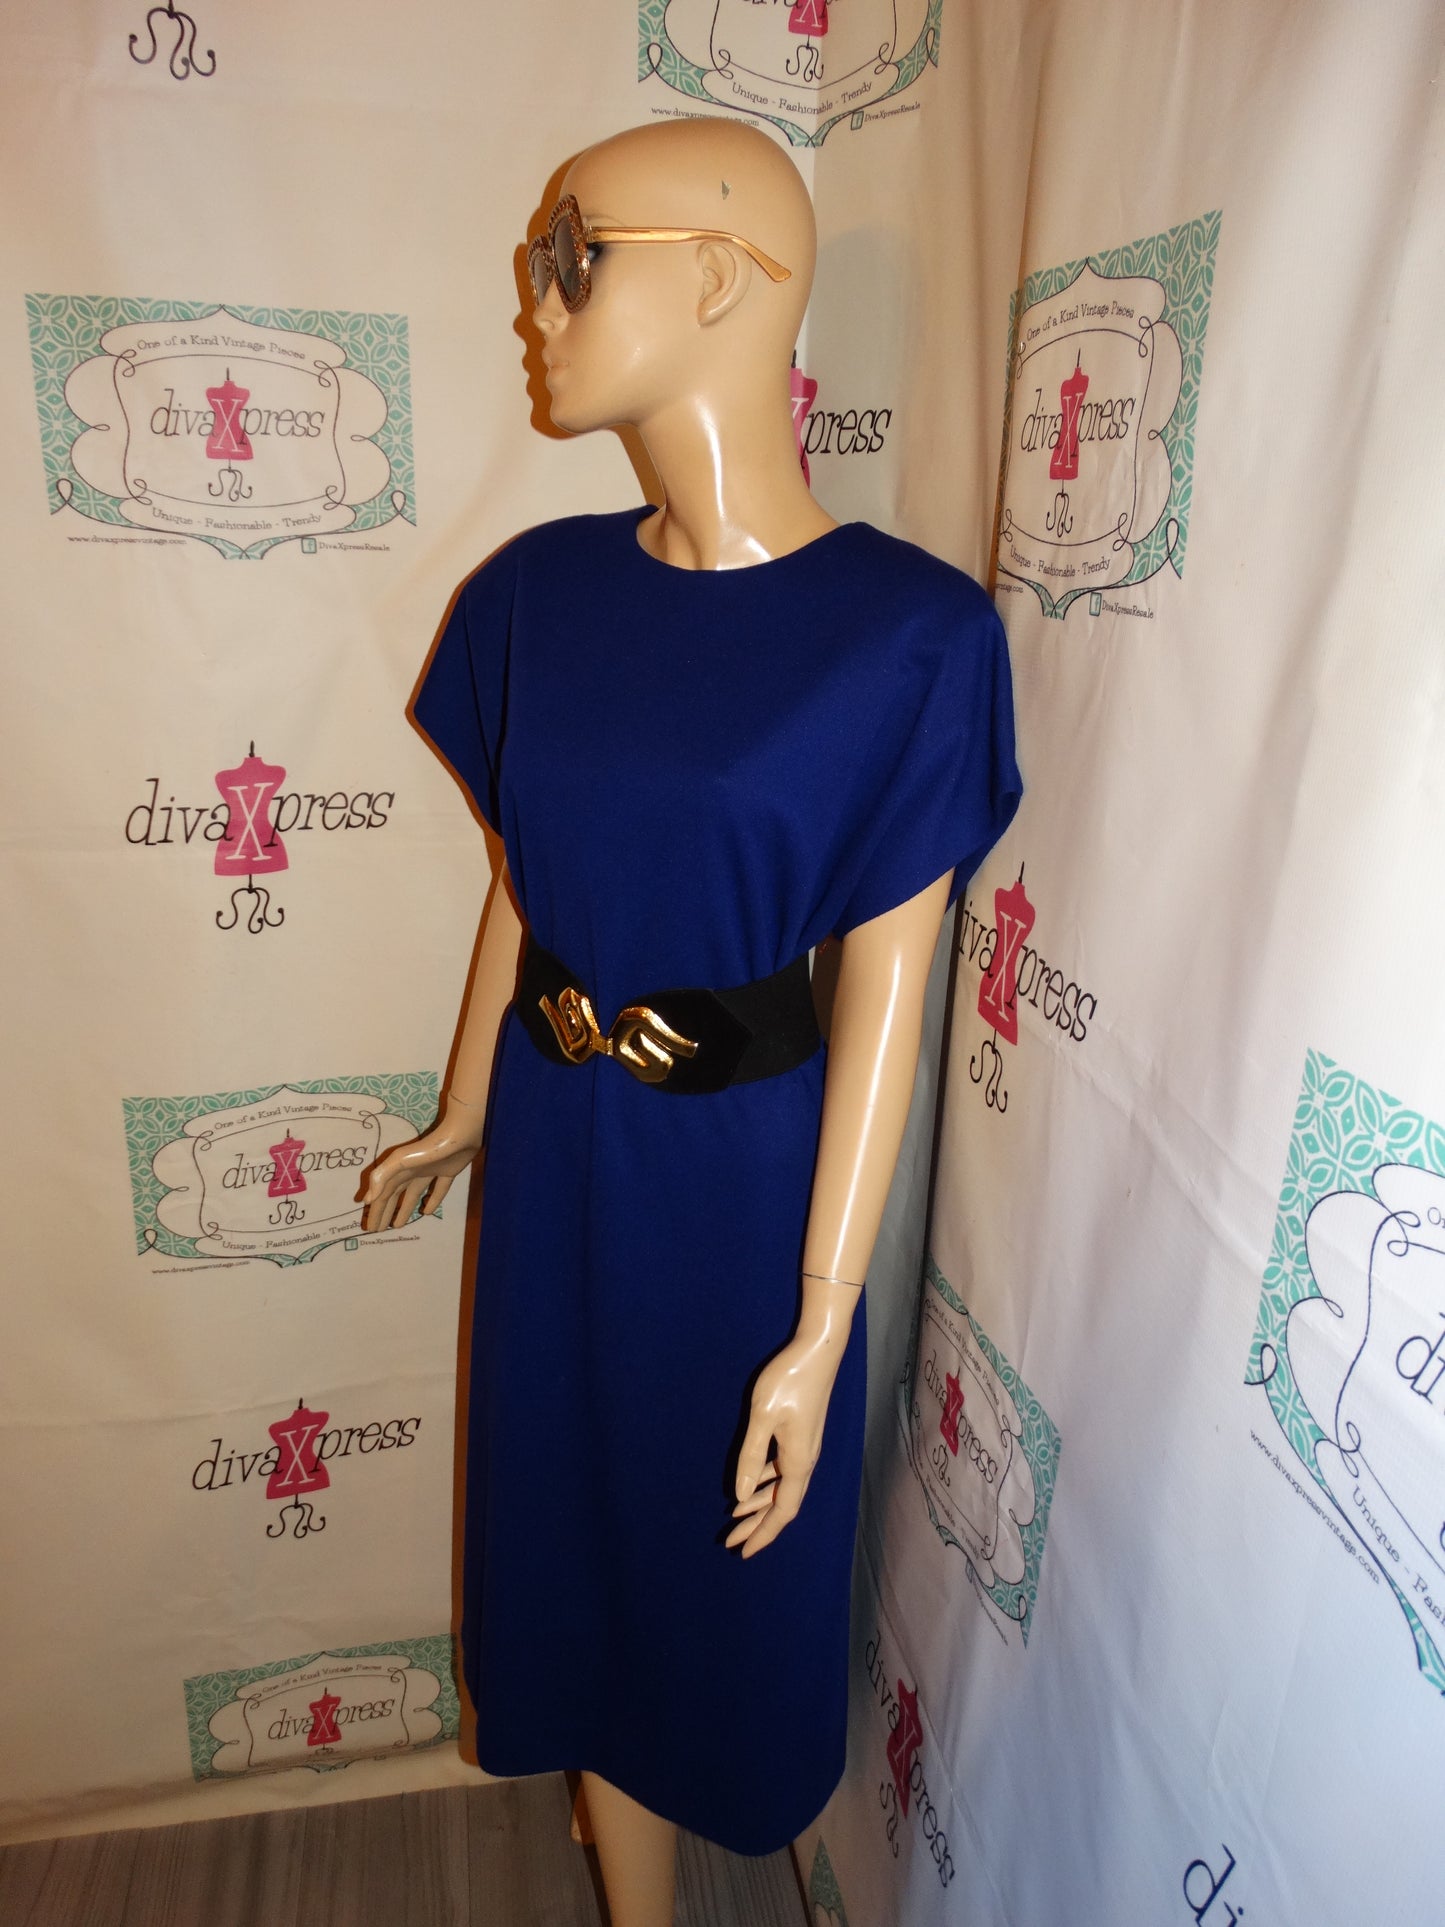 Vintage Leslie Fay Purple Dress Size 1x